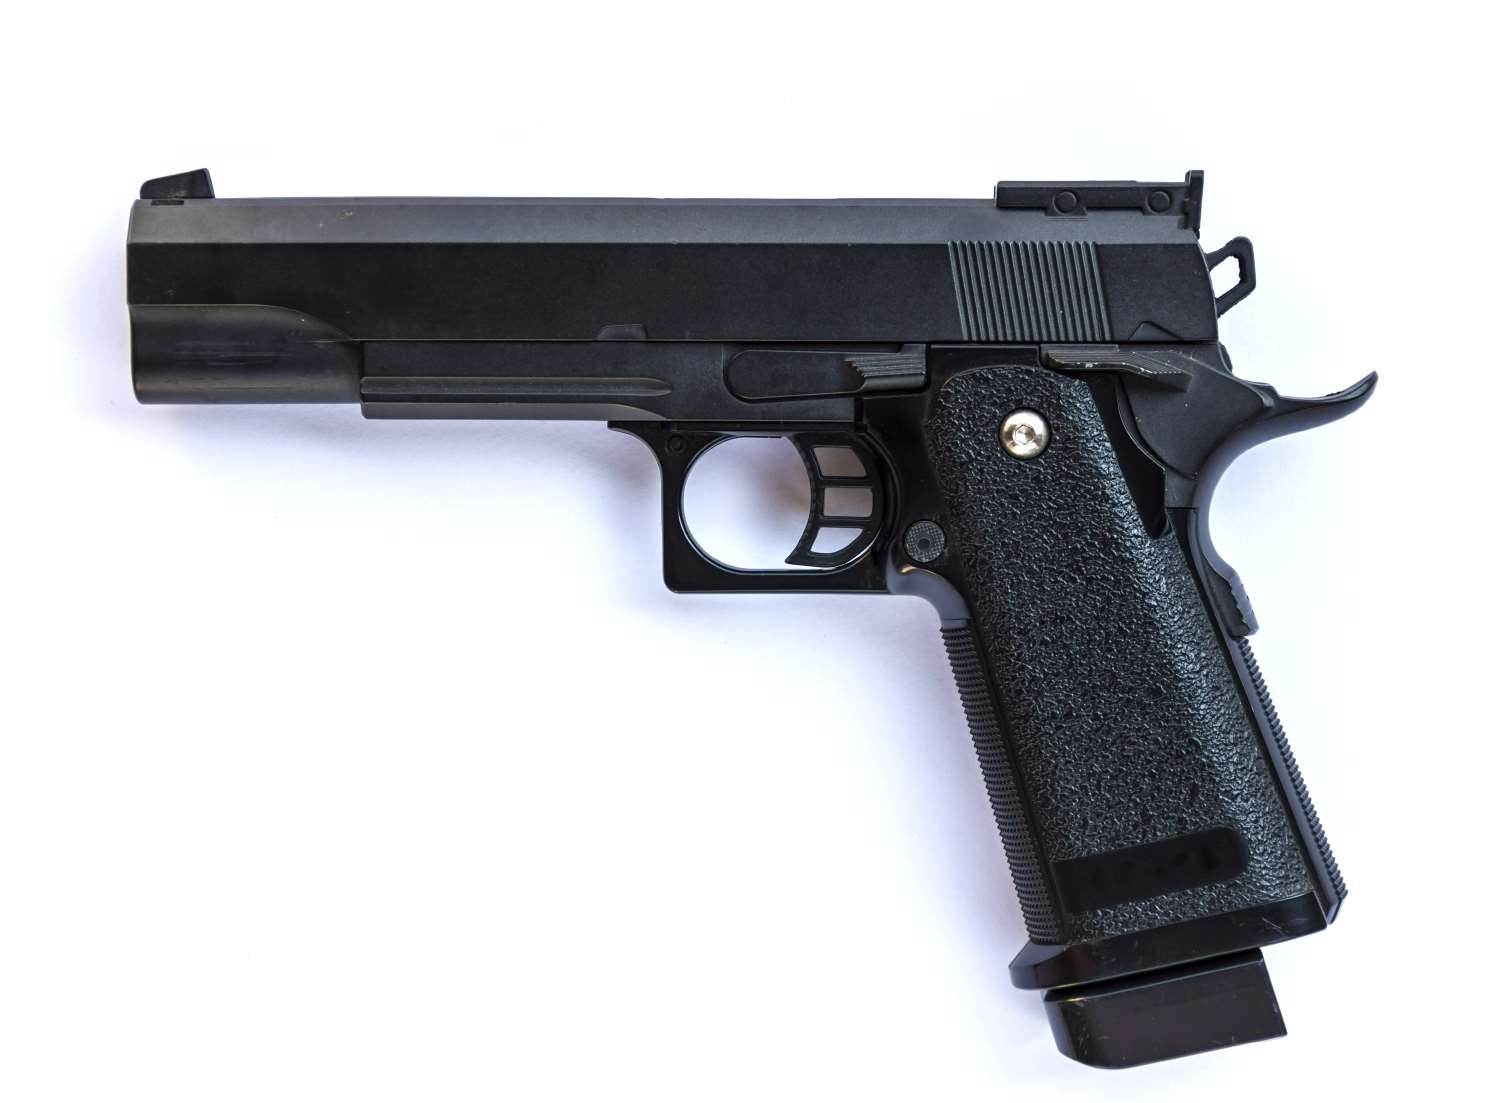 Mironov was in possession of an imitation handgun